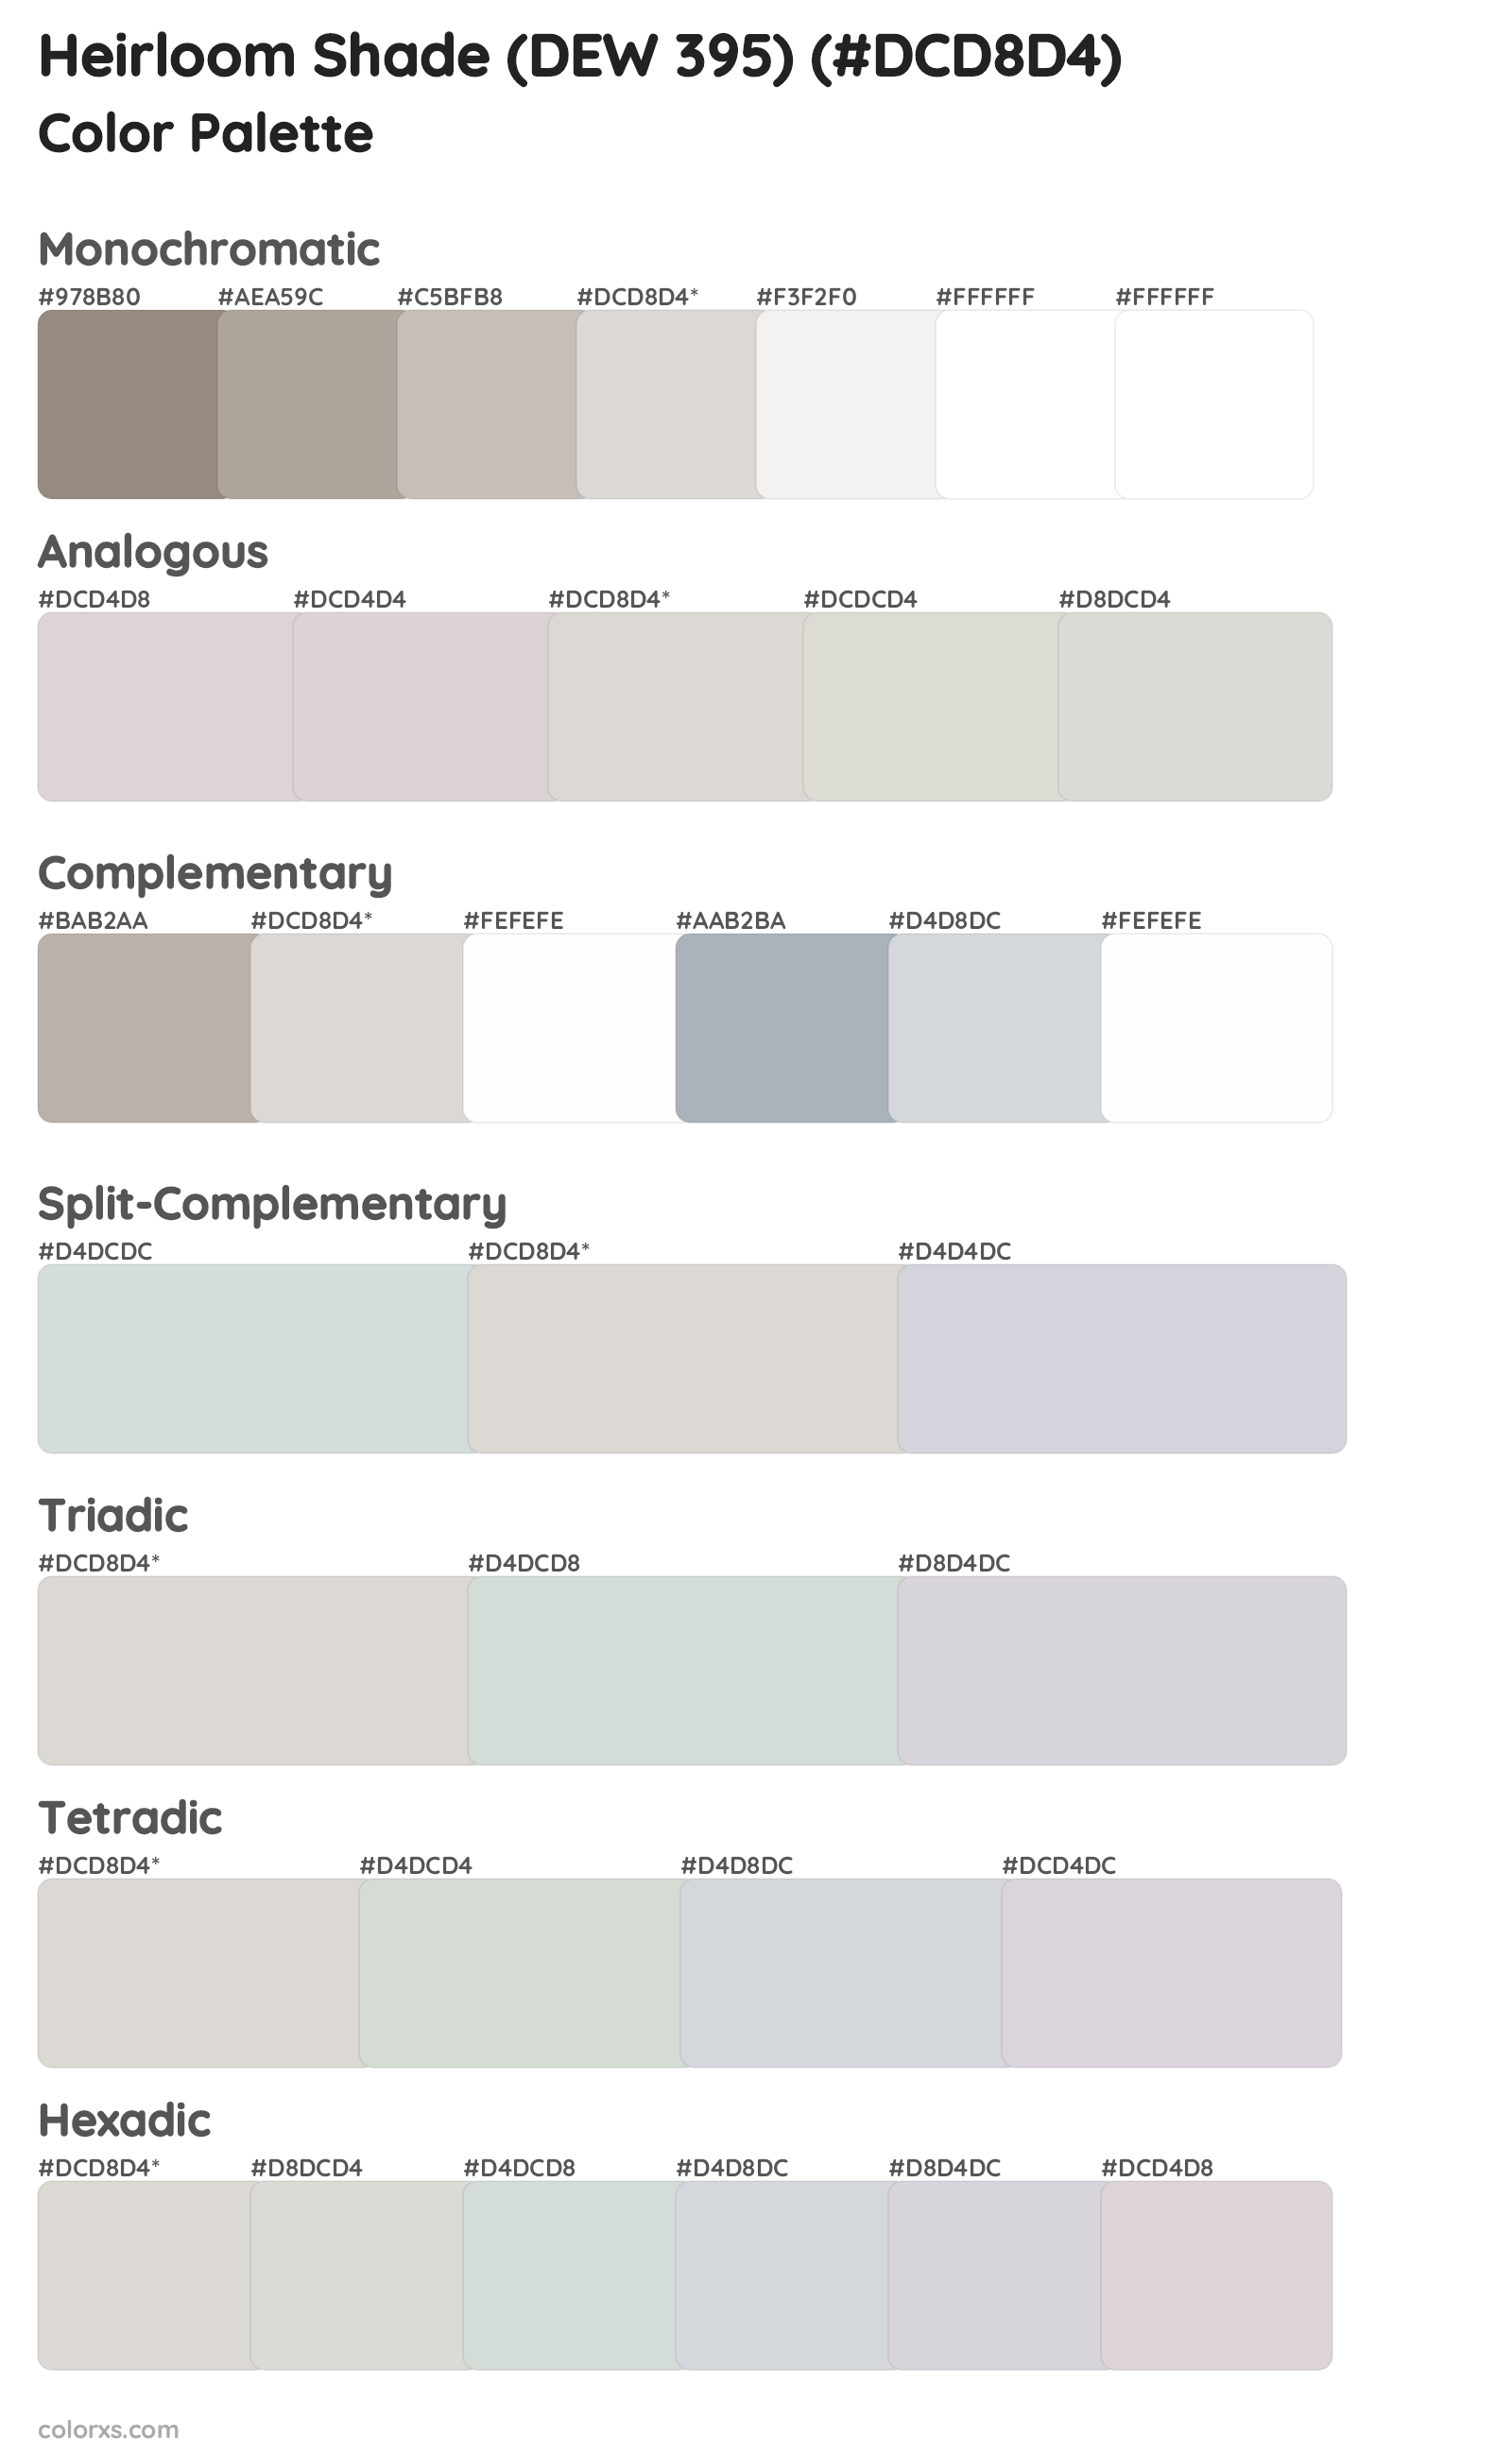 Heirloom Shade (DEW 395) Color Scheme Palettes